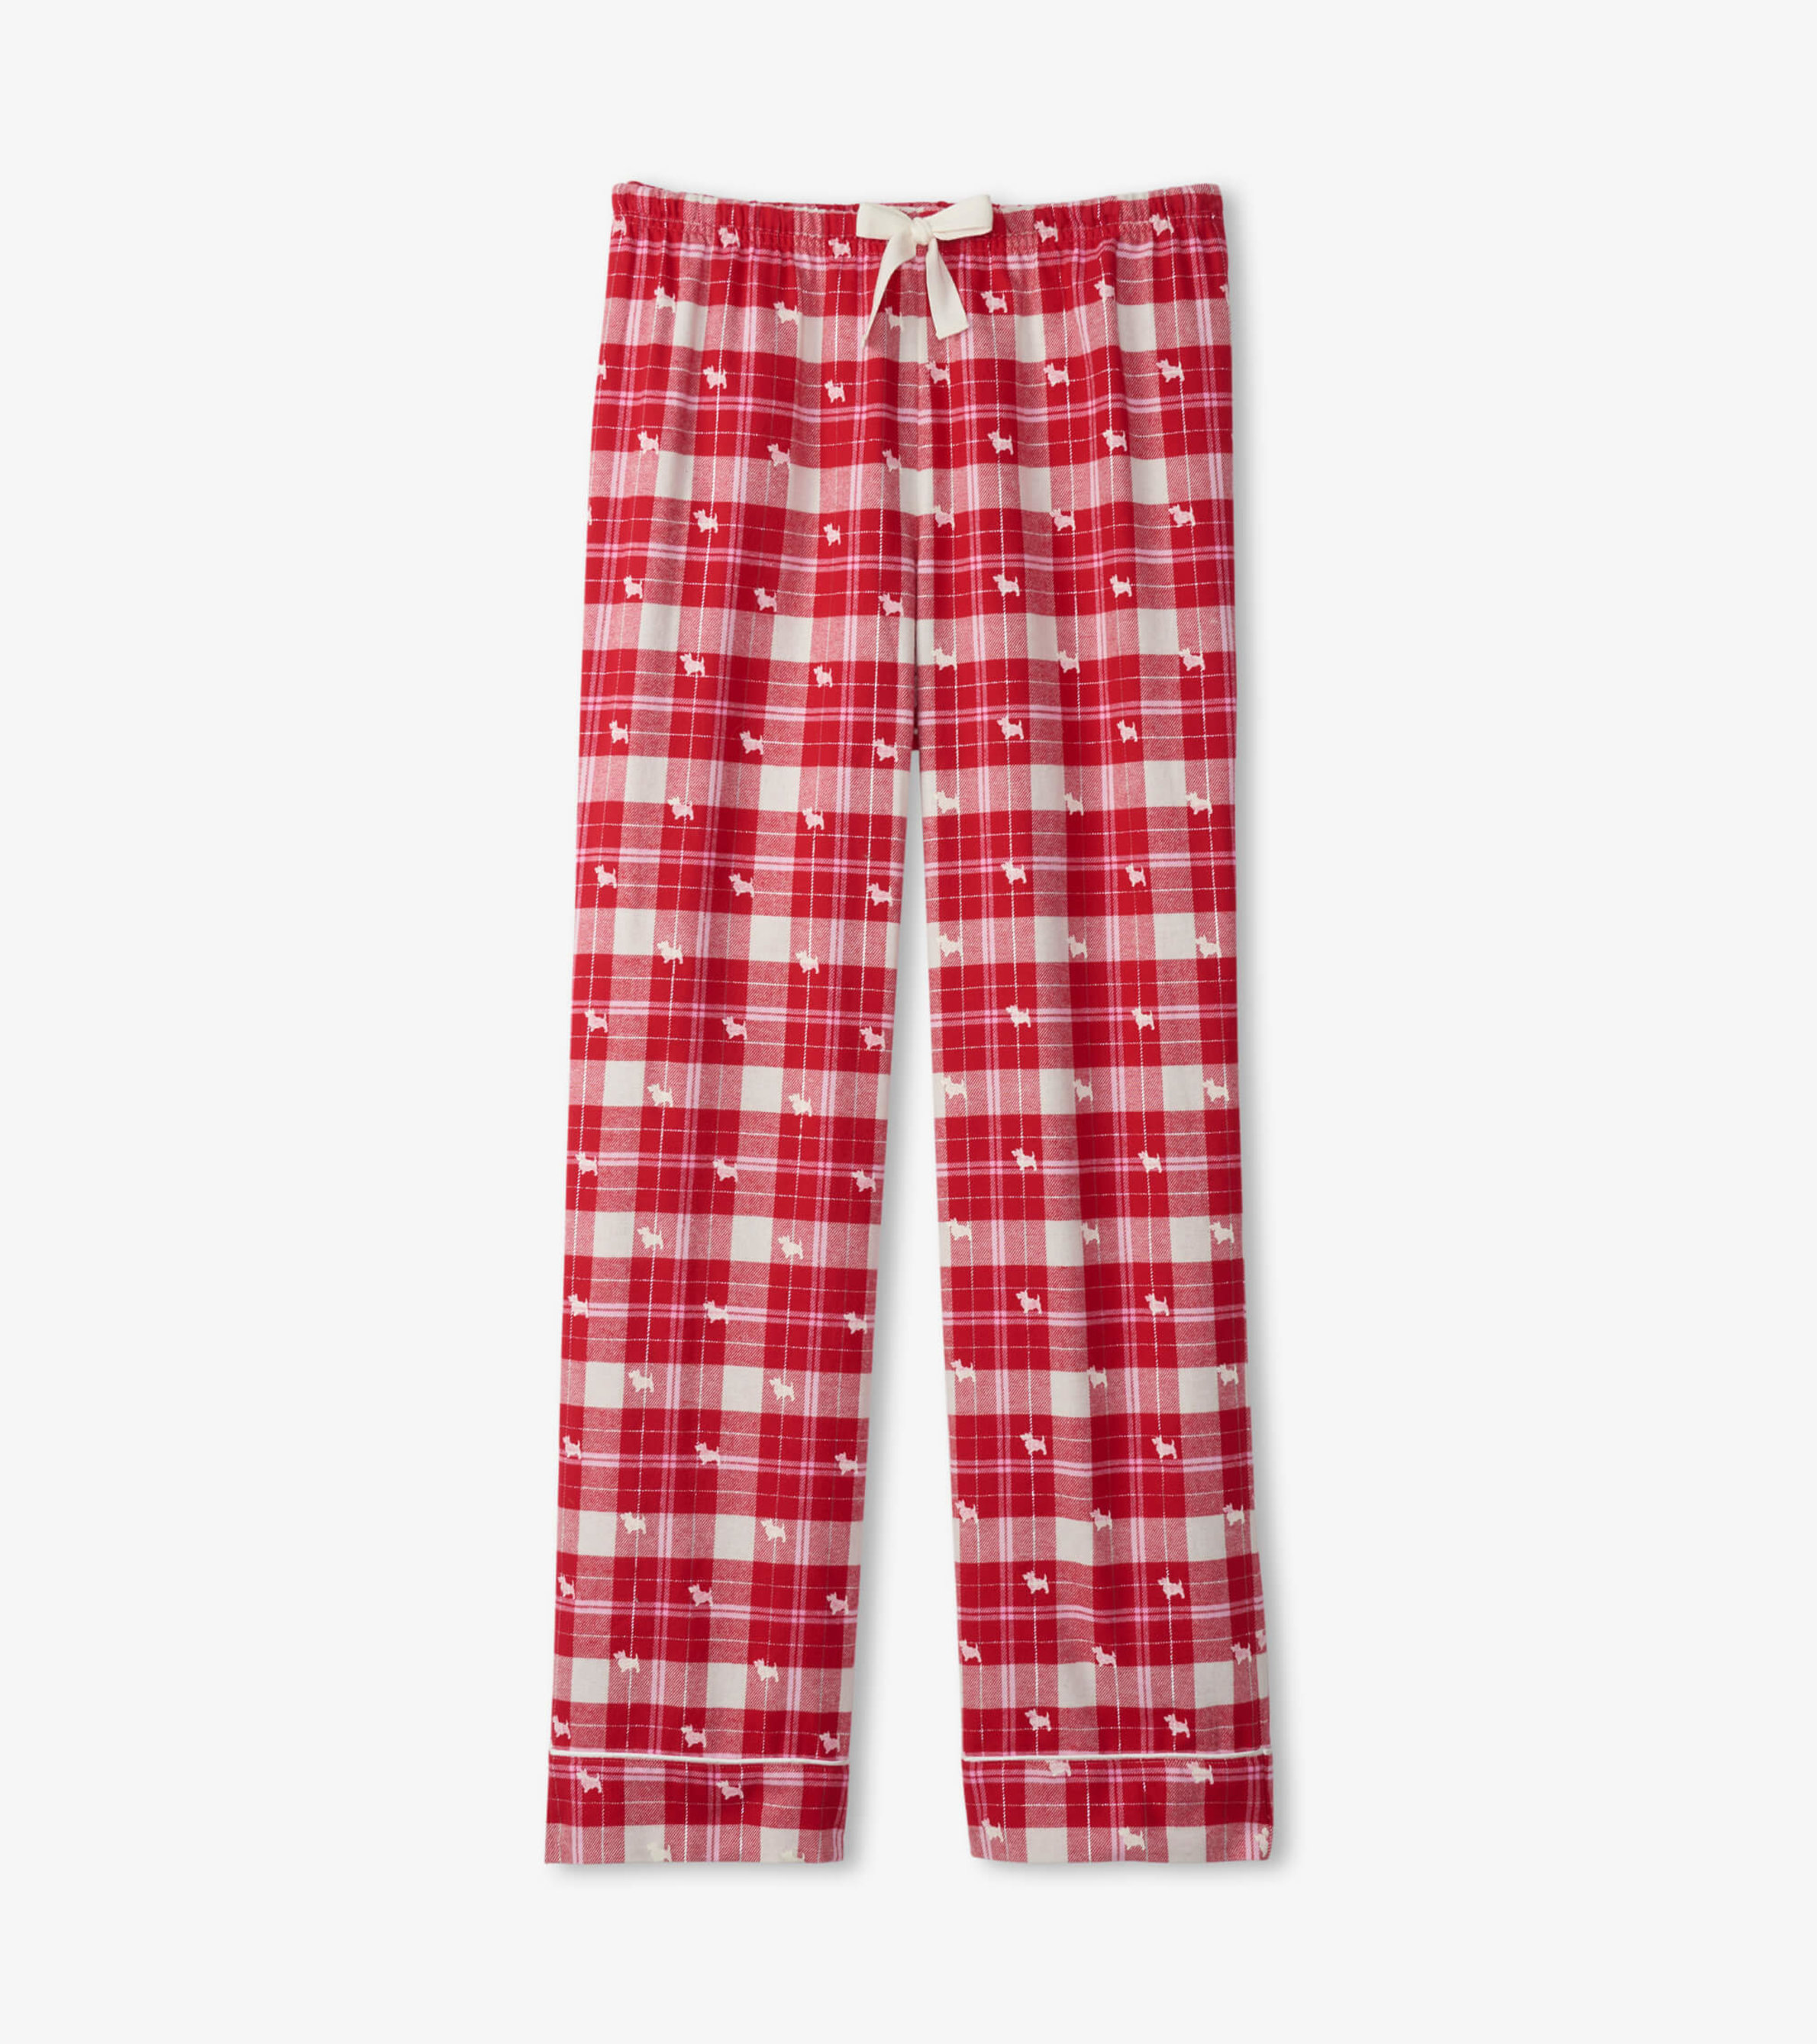 Women's Country Christmas Plaid Flannel Pajama Set